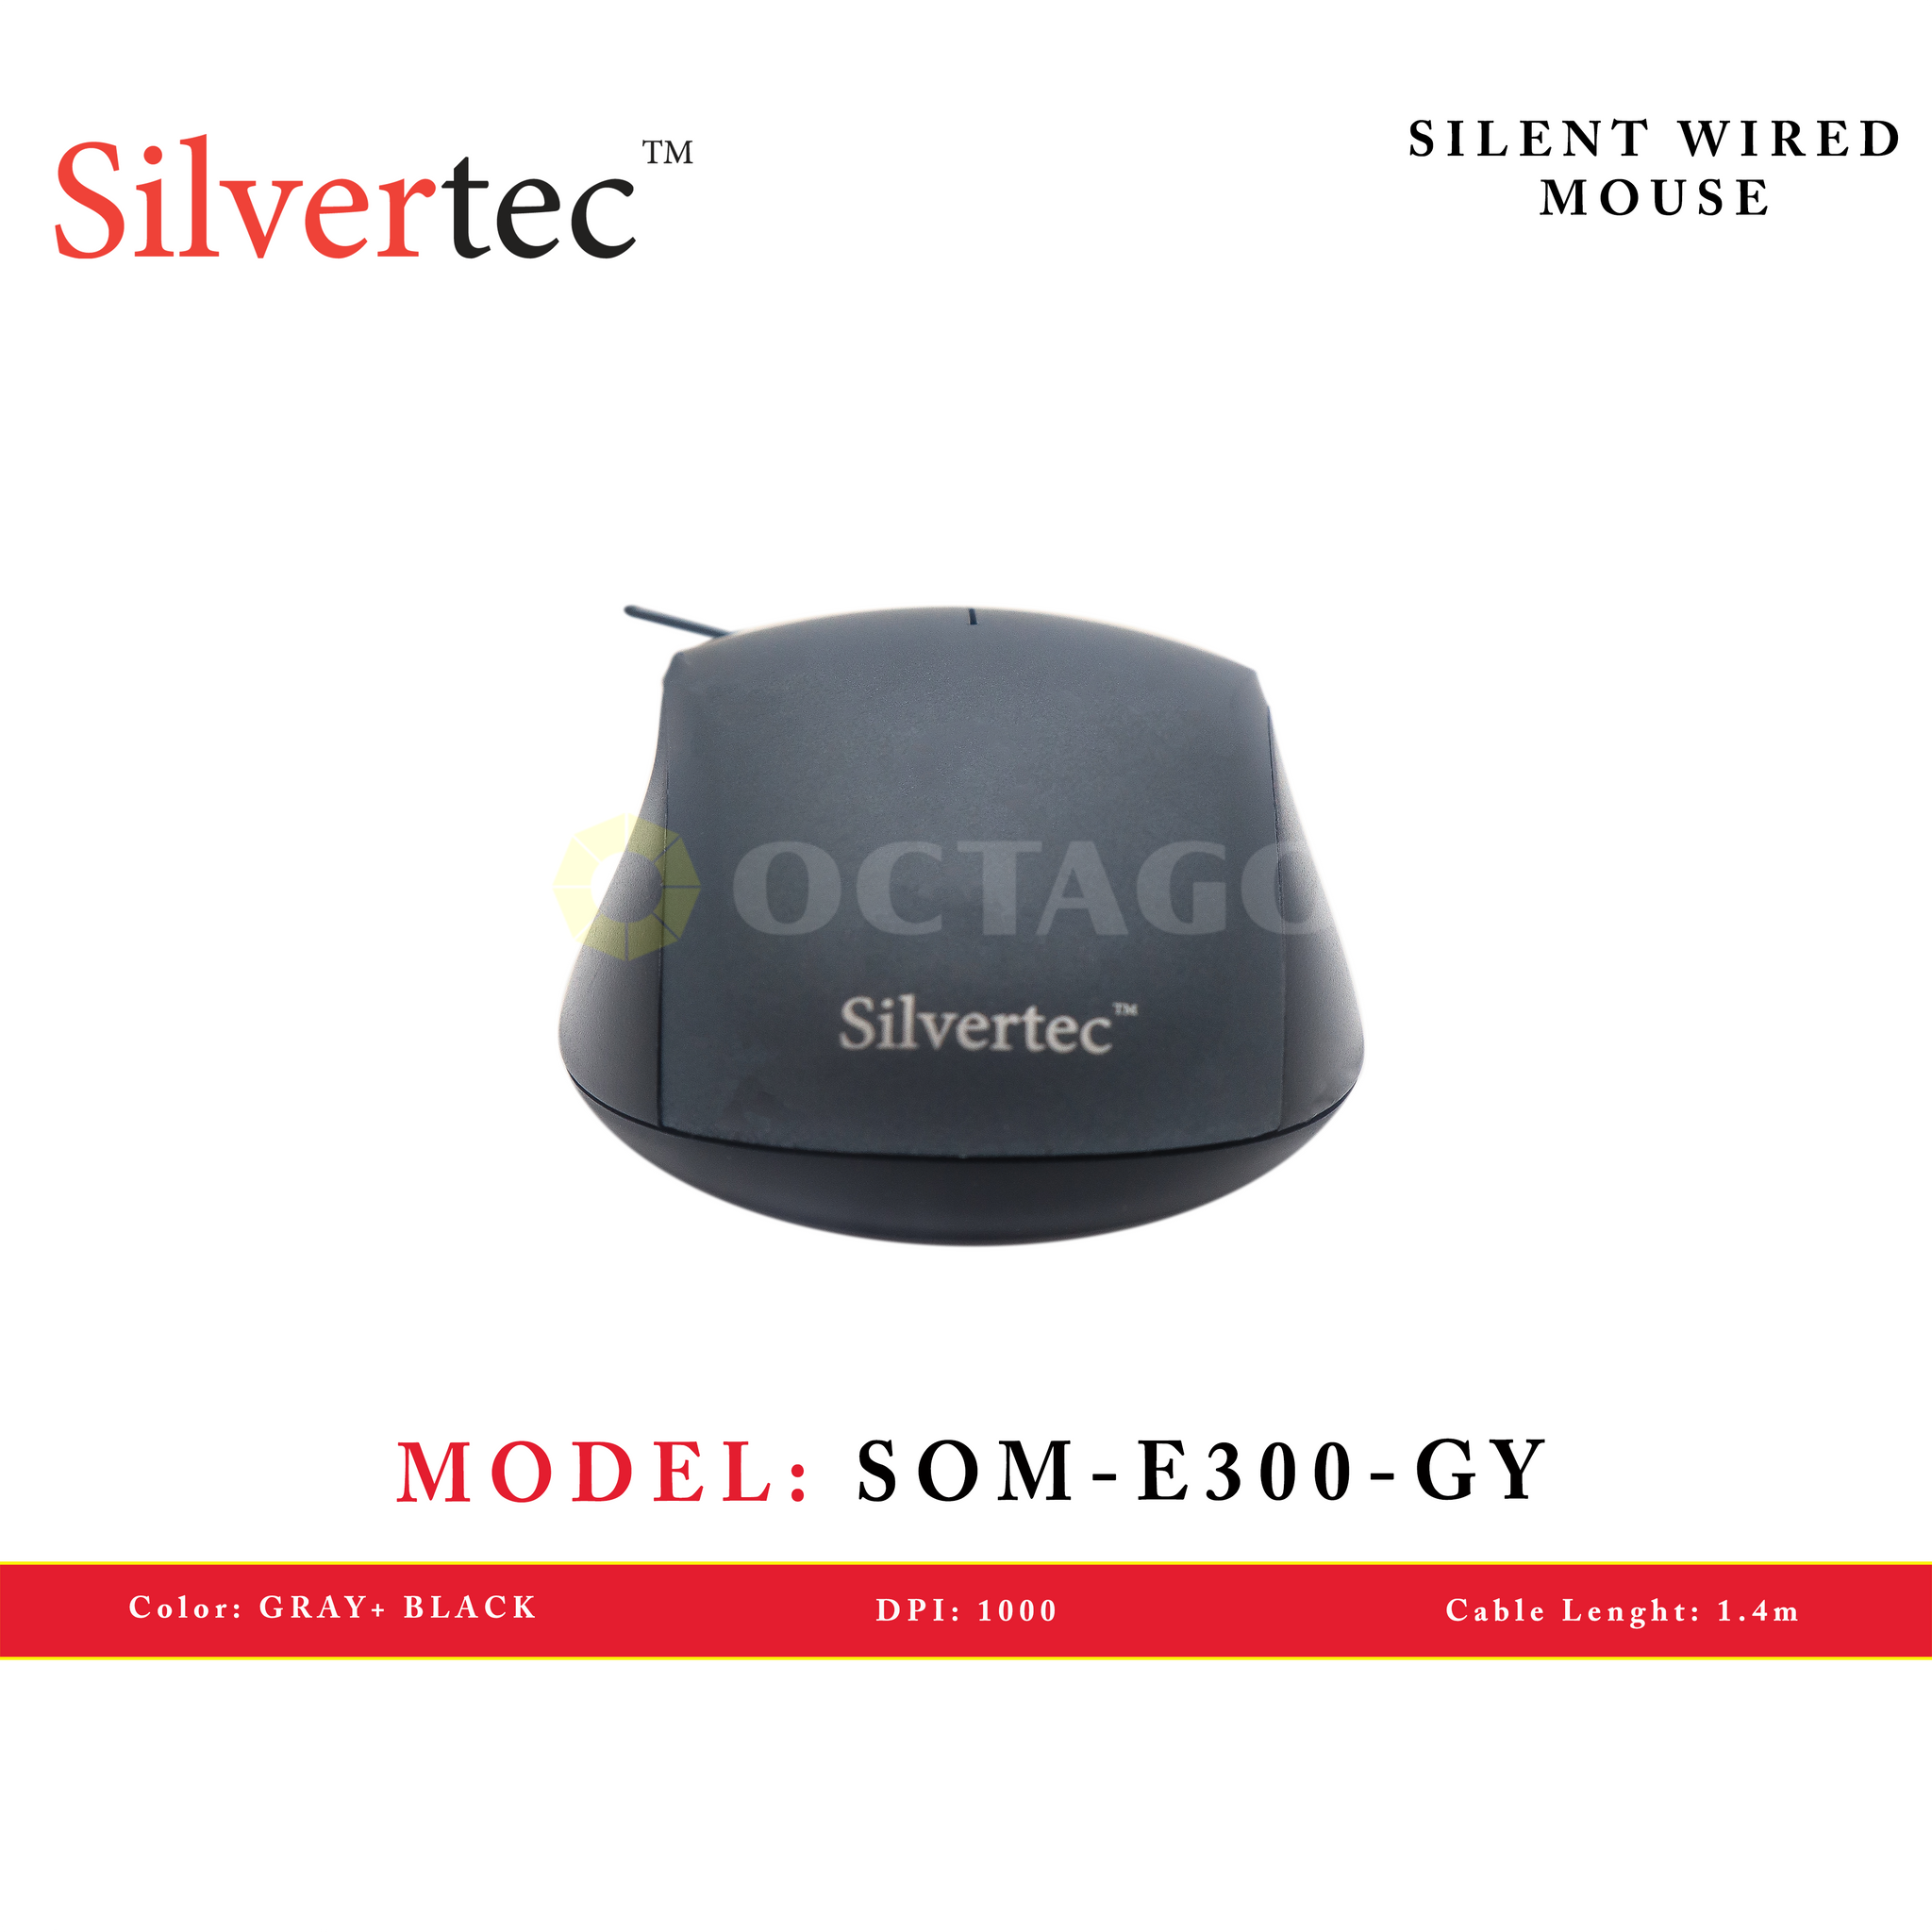 SILVERTEC SOM-E300-GY 1000DPI SILENT